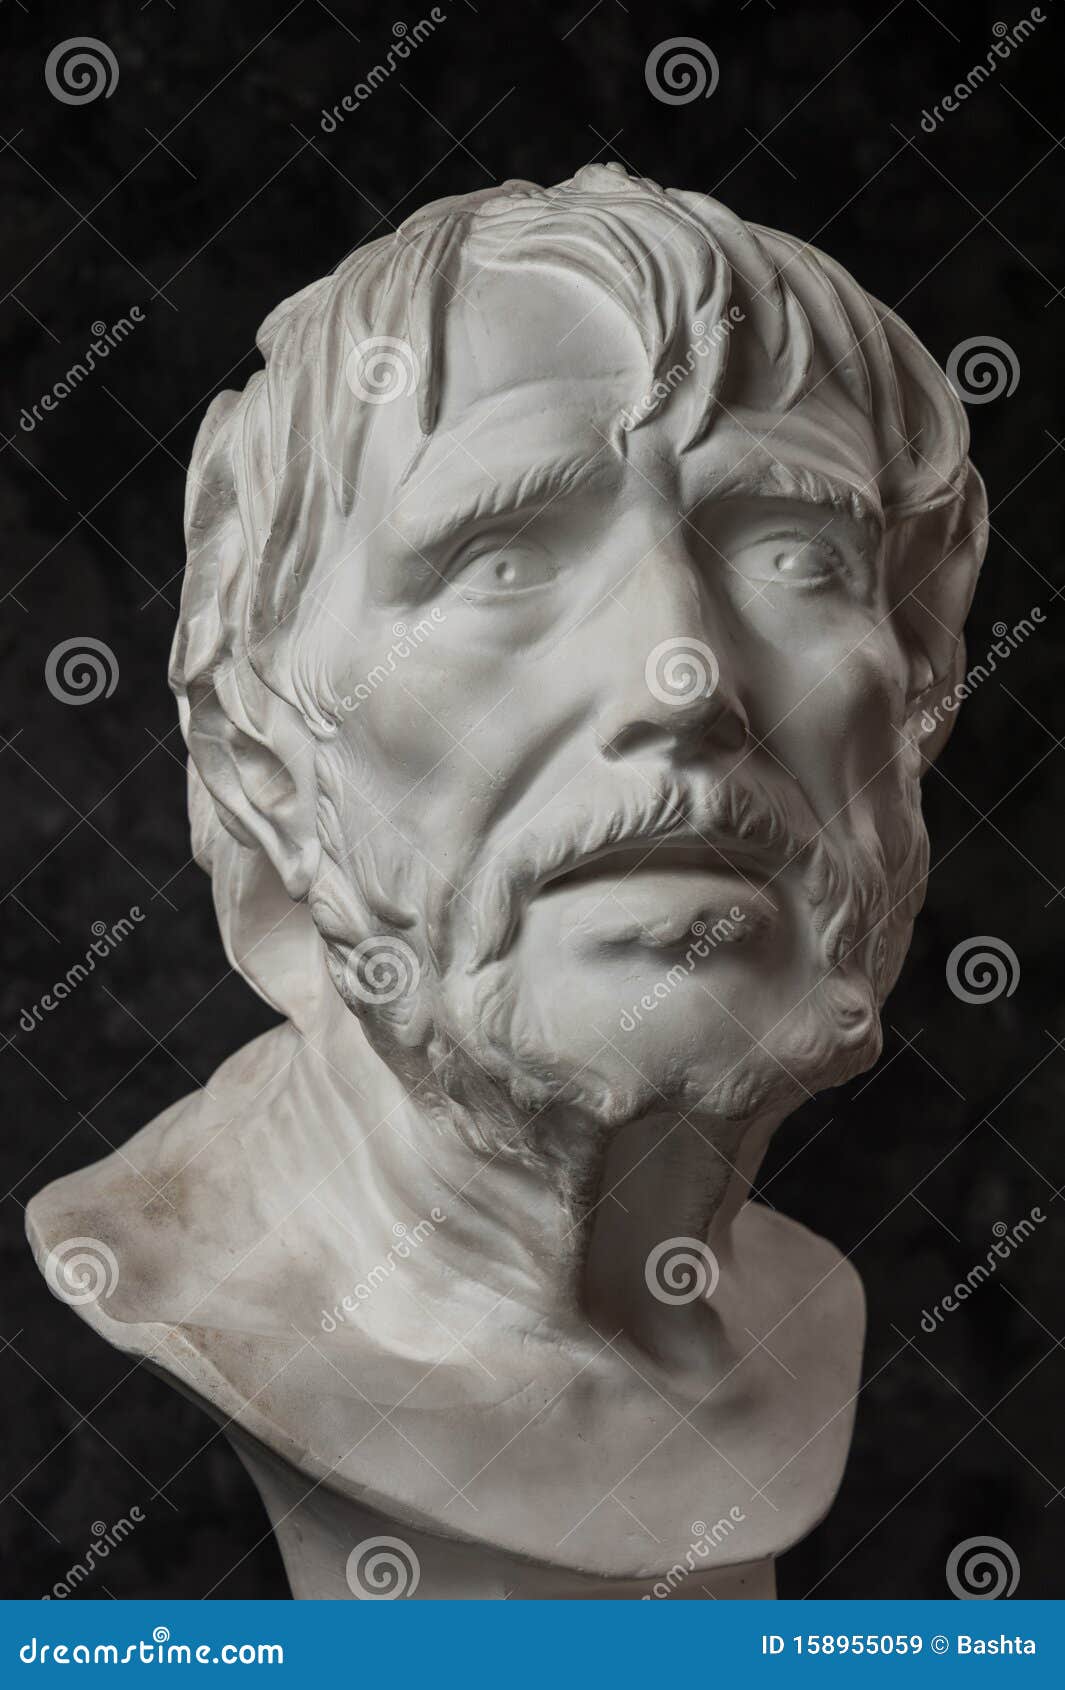 gypsum copy of ancient statue seneca head on dark textured background. plaster sculpture man face.